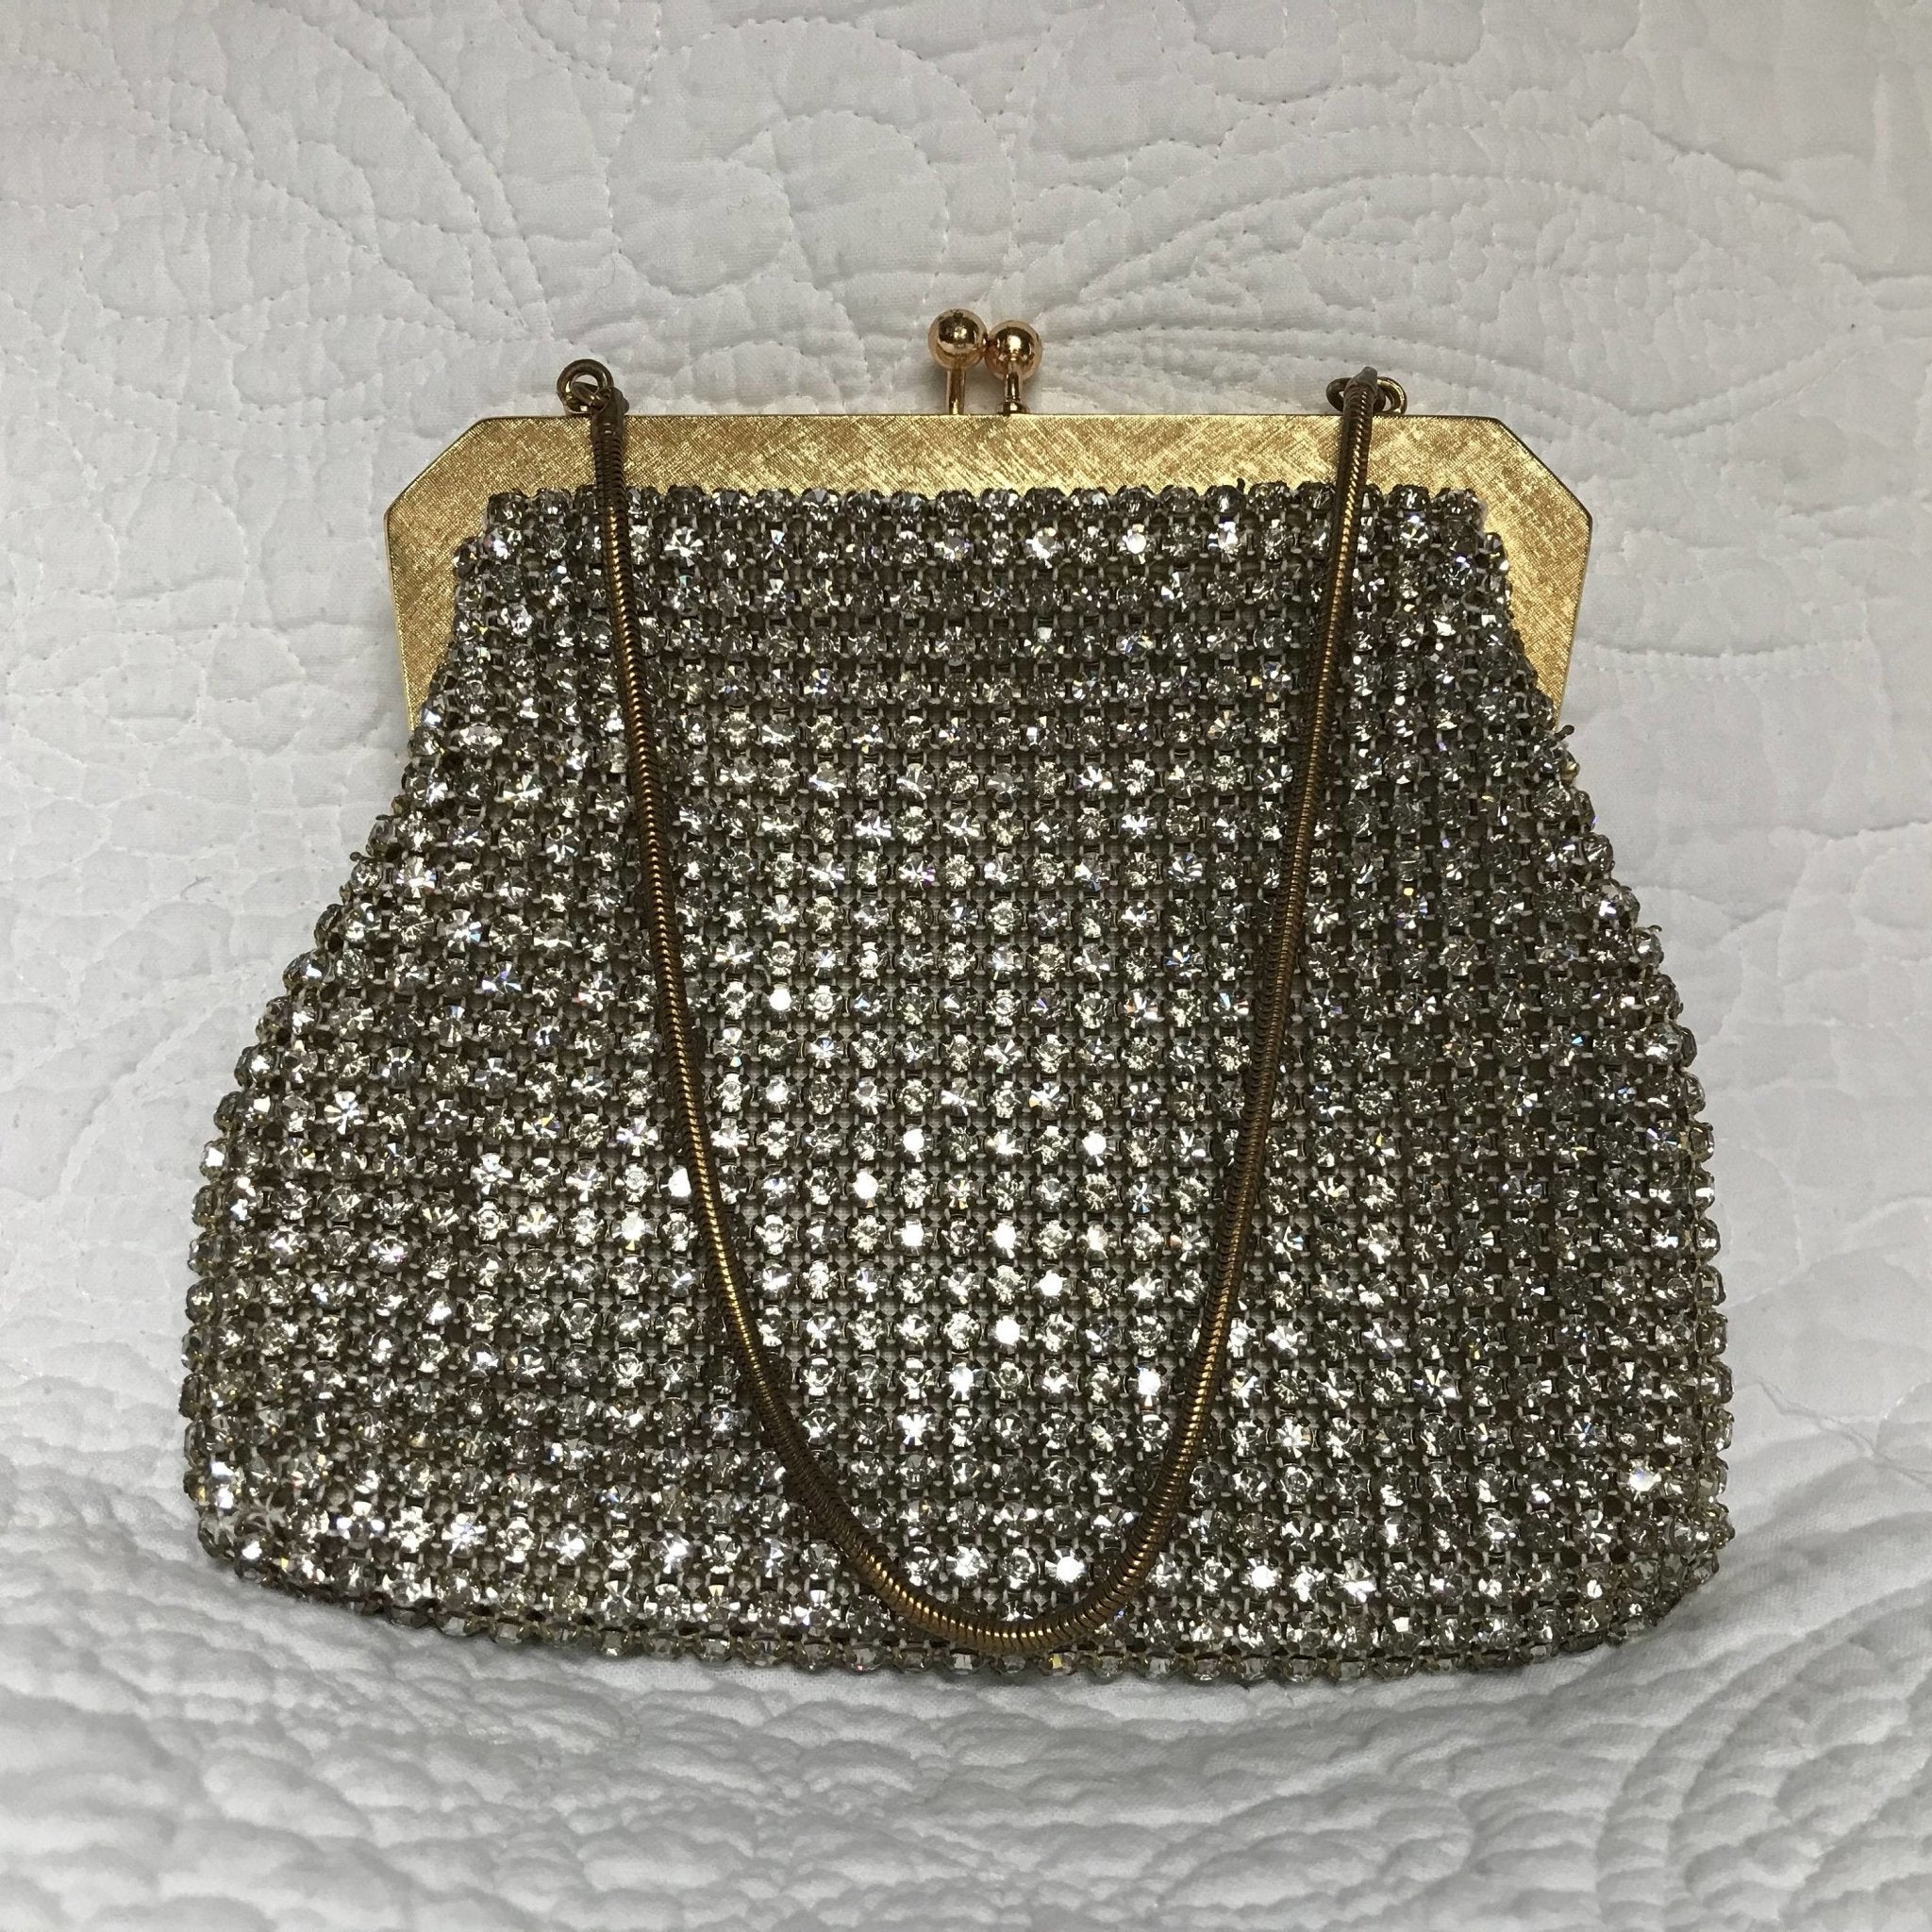 THE STYLE SUTRA® Vintage Rhinestone Metal Purse Frame Kiss Clasp Lock Clutch  Bag Handle | Womens Handbags & Bags |Handbag Accessories : Amazon.in:  Fashion